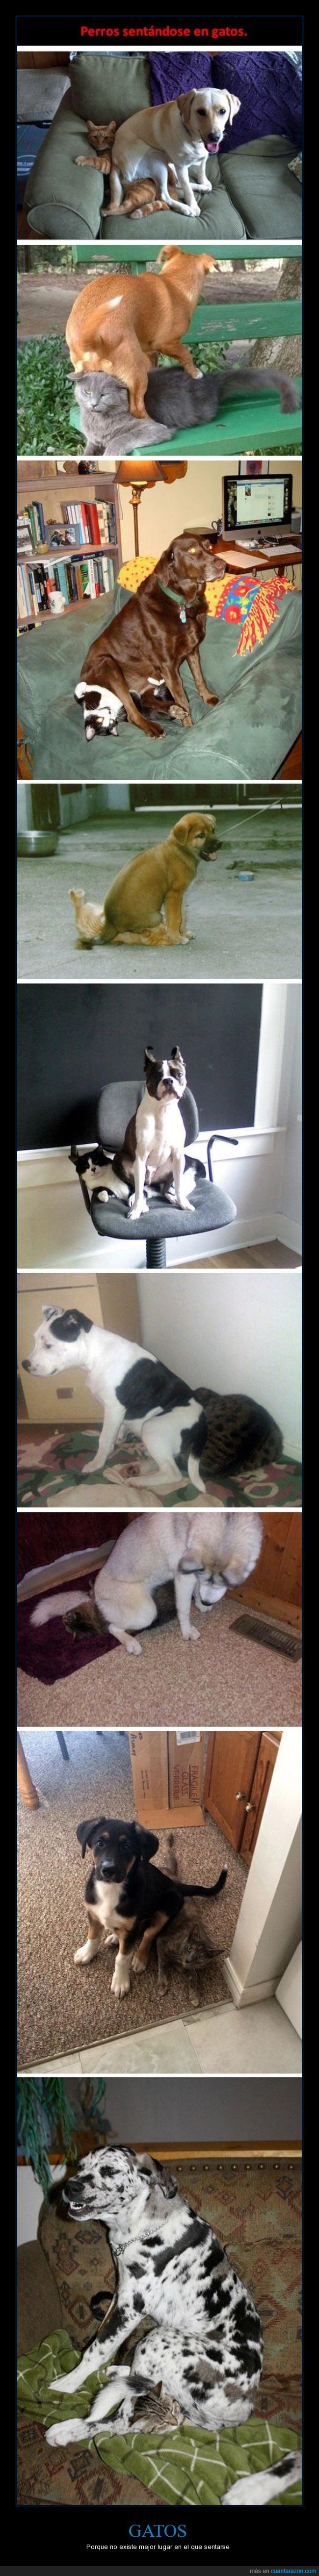 gatos,gato,perro,silla,sentar,genial,cojín,encima